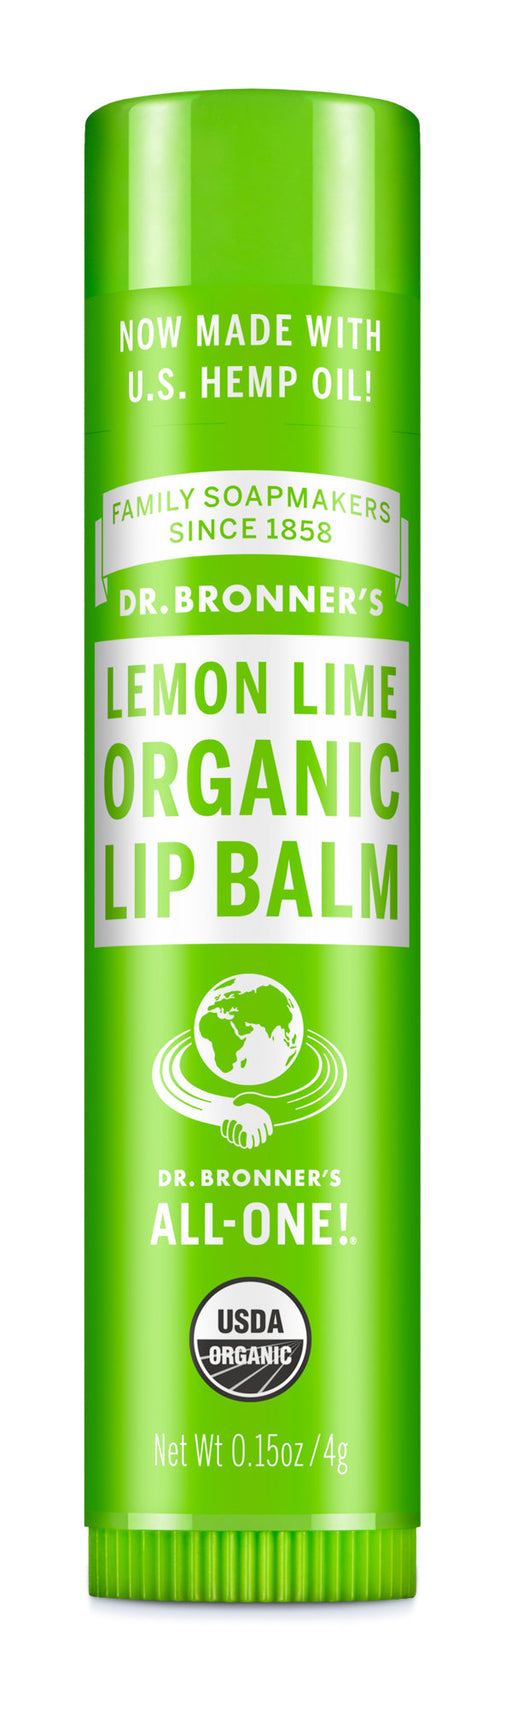 Lemon Lime - Organic Lip Balms - .15 oz - ProCare Outlet by Dr Bronner's